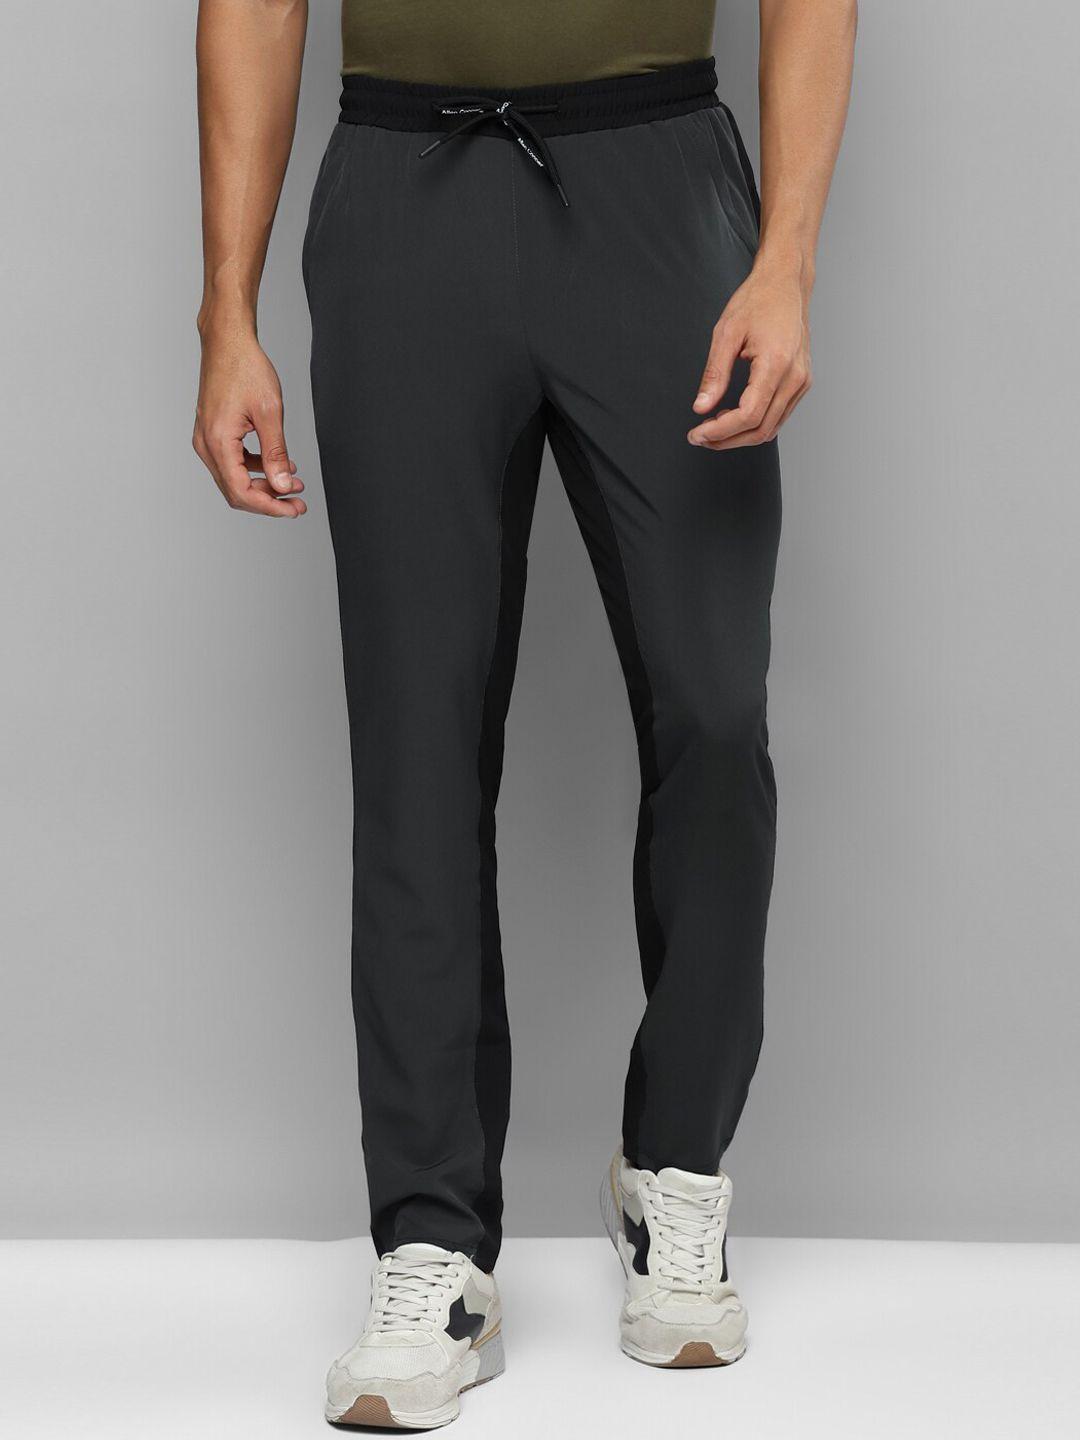 allen-cooper-men-black-&-grey-colourblocked-dry-fit-track-pants